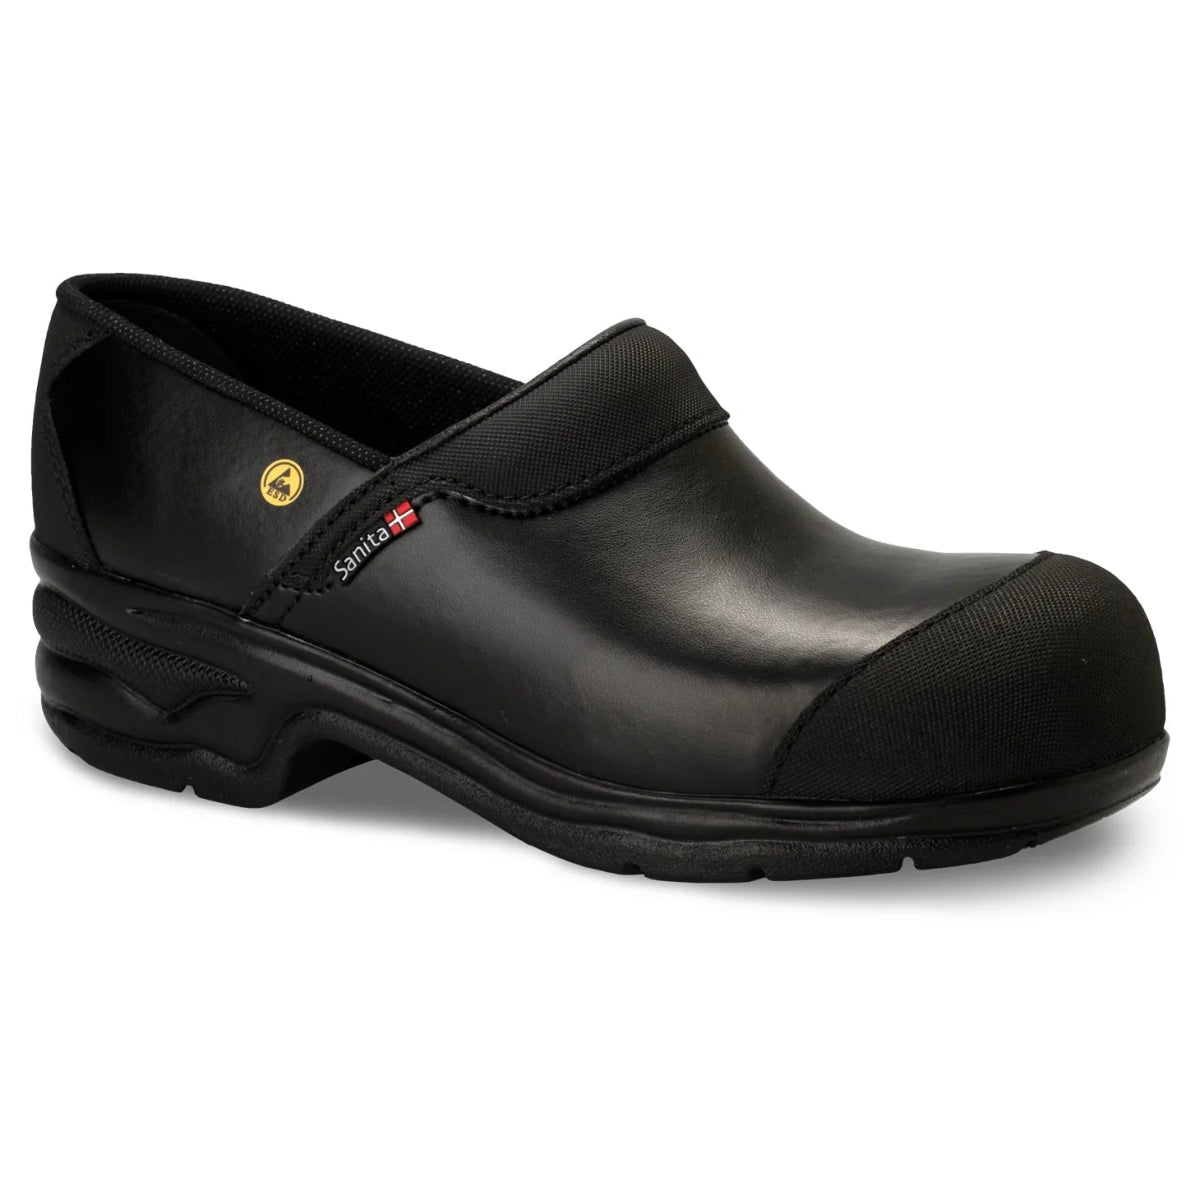 SANITA PRO LIGHT S3 CLOG UNISEX IN BLACK - TLW Shoes